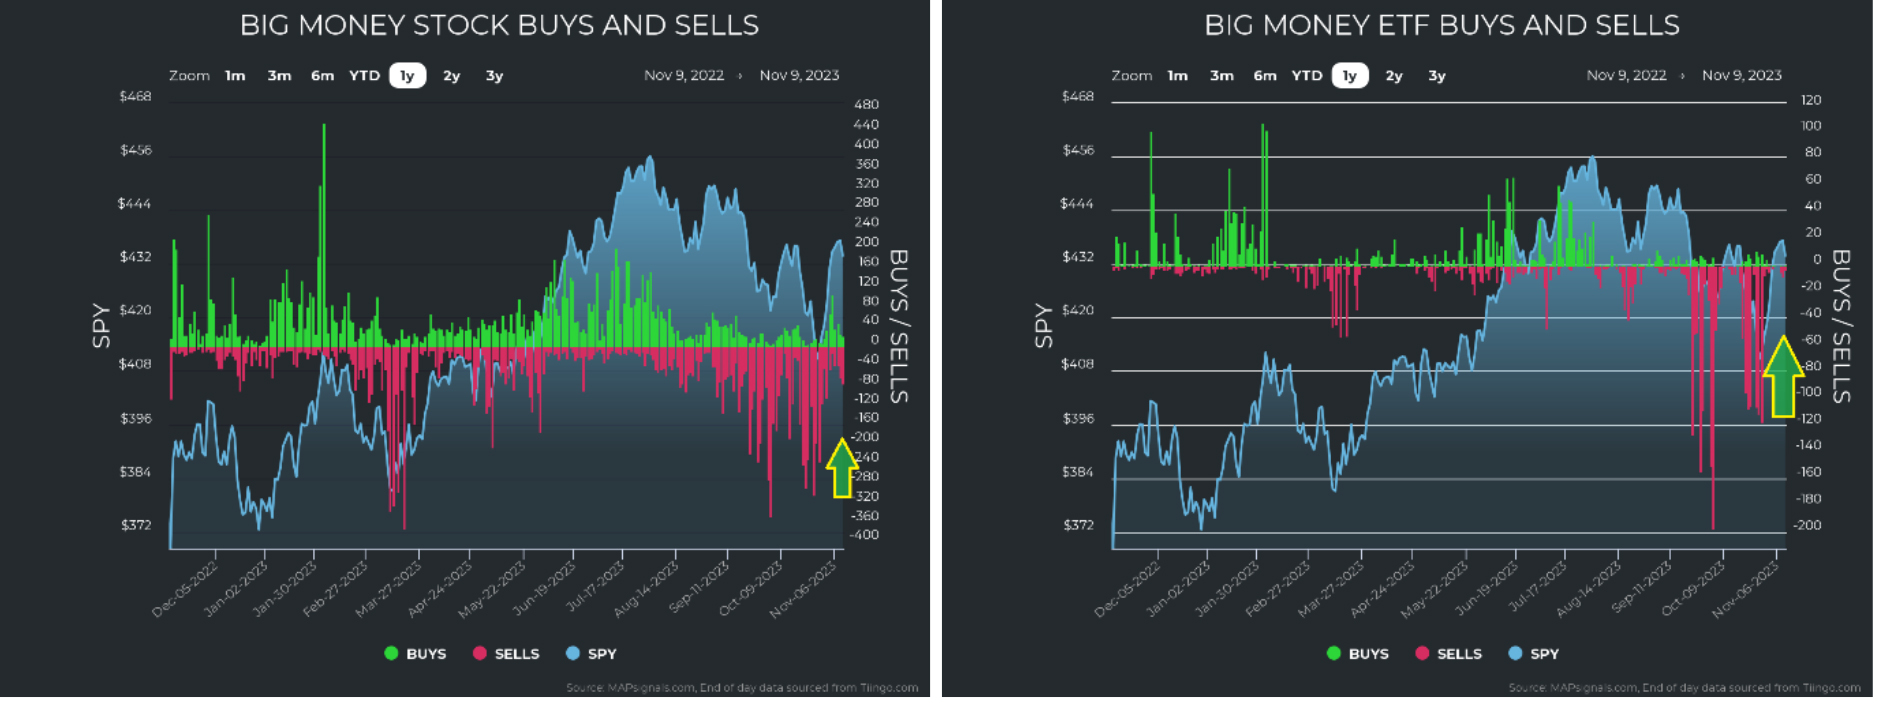 Big-Money-Stock-ETF-Charts